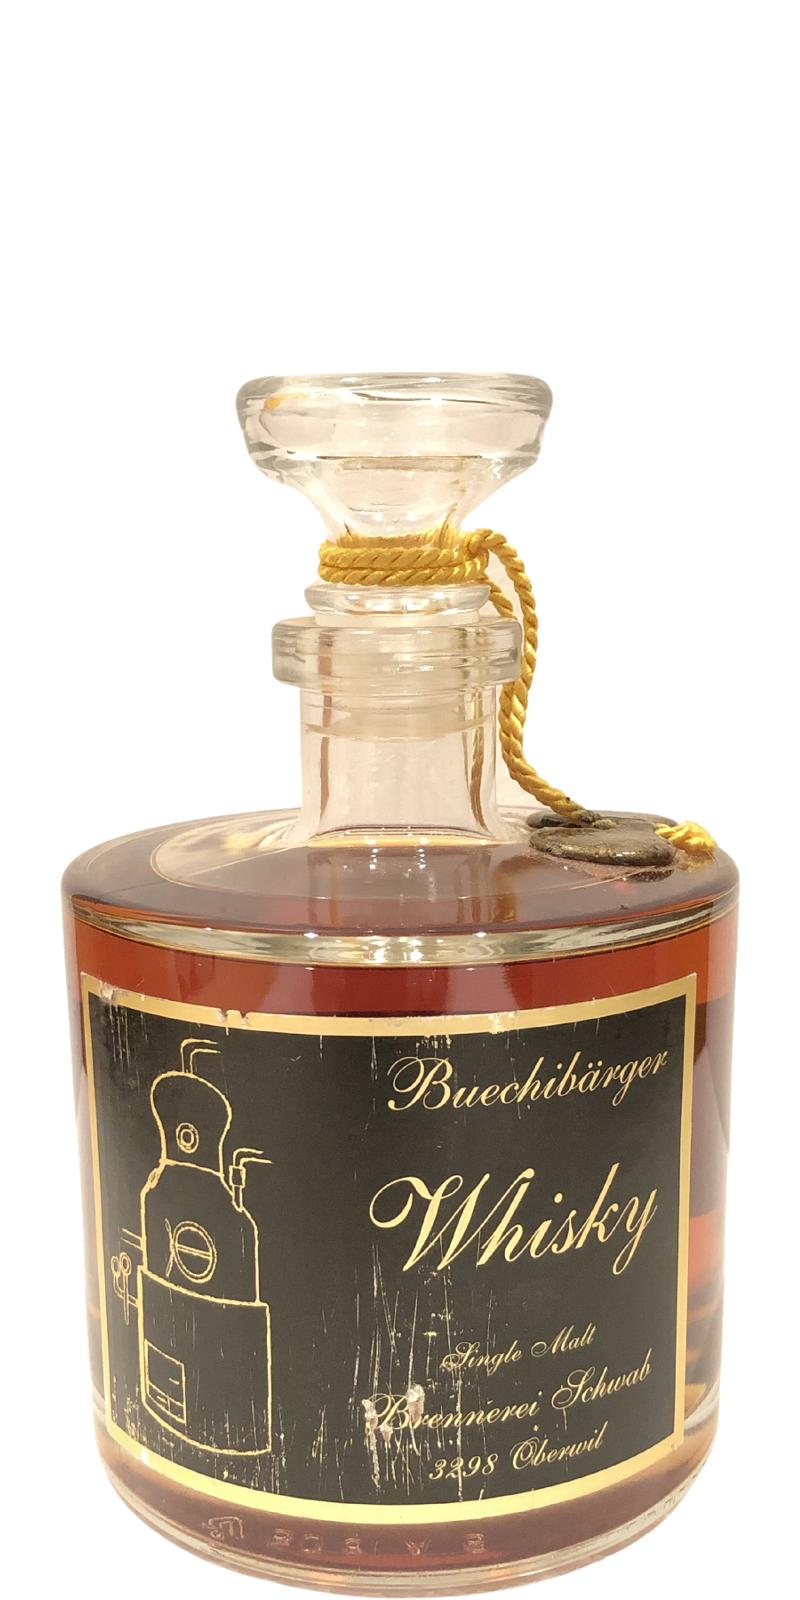 Buechibarger Whisky 2008 Cask Strength Chardonnay Fass 55% 500ml